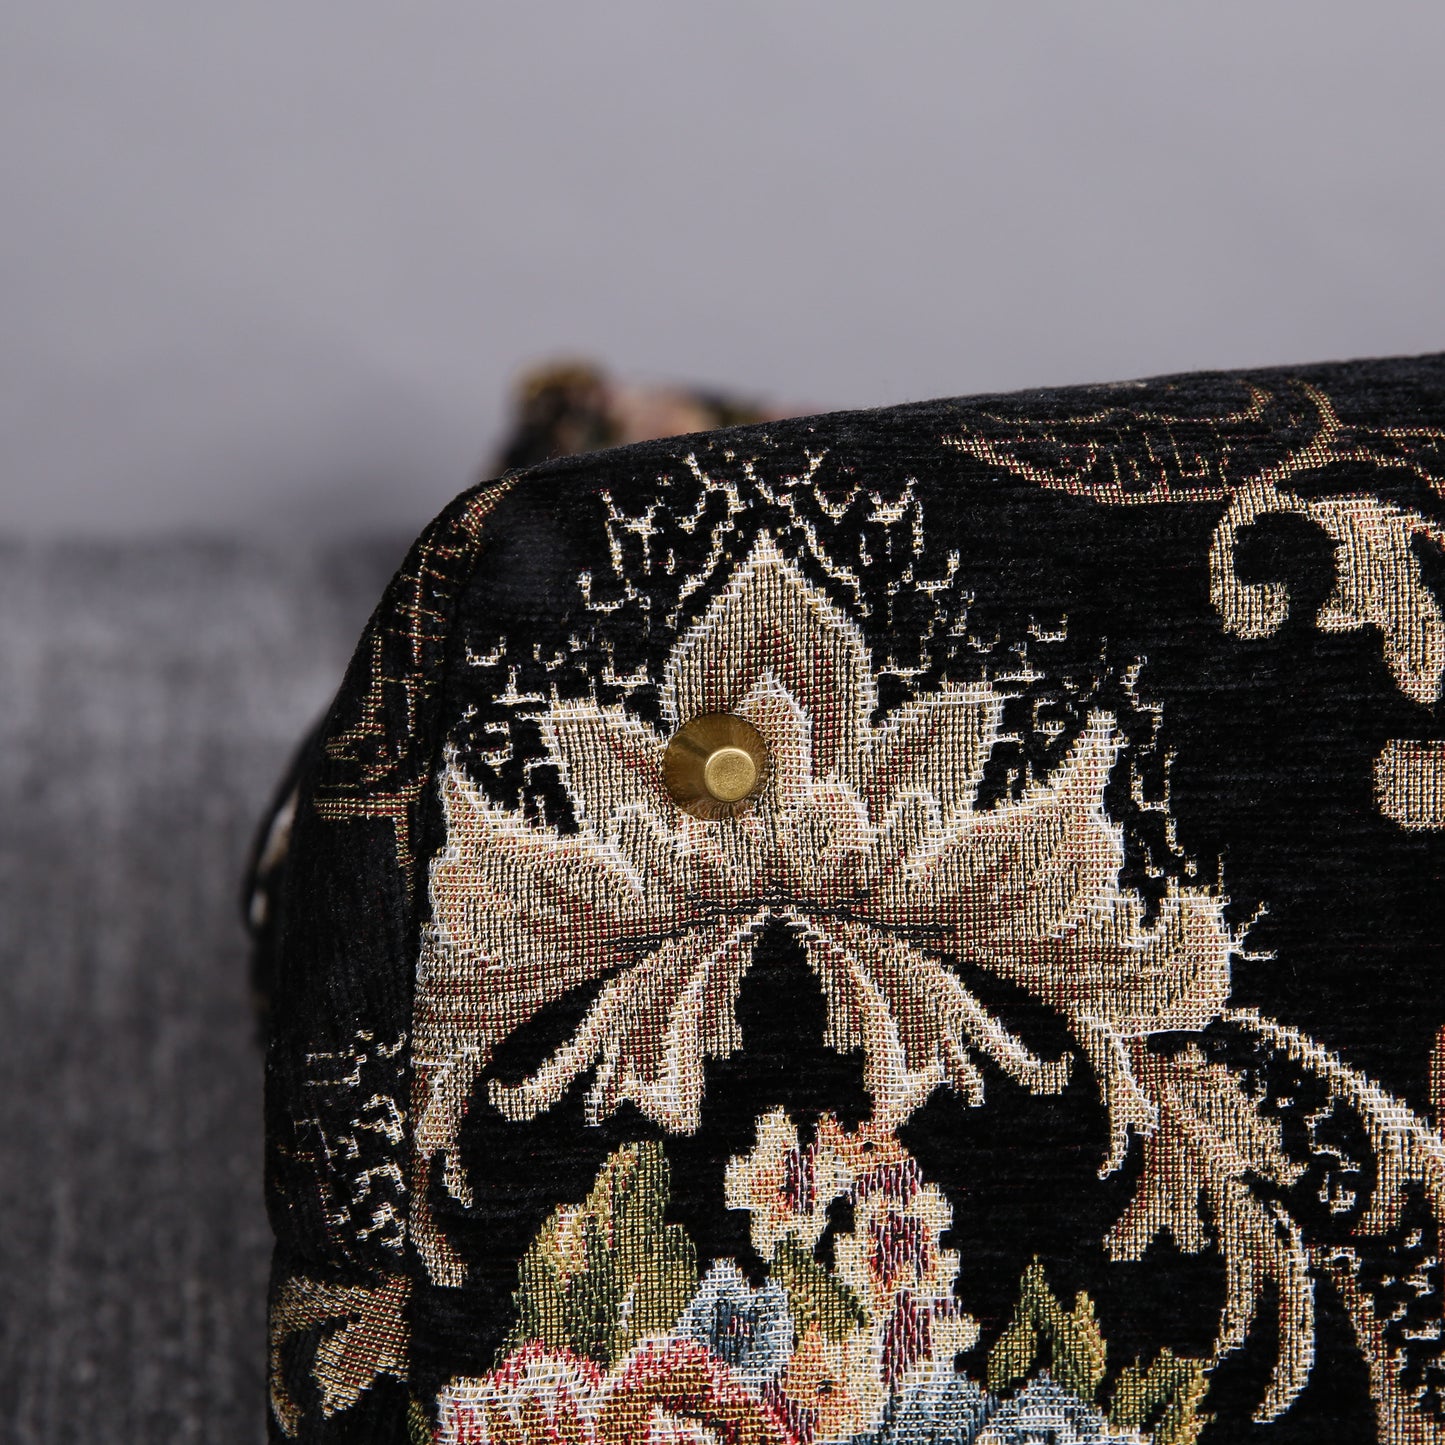 Mary Poppins Carpet Bag<br>Floral Black